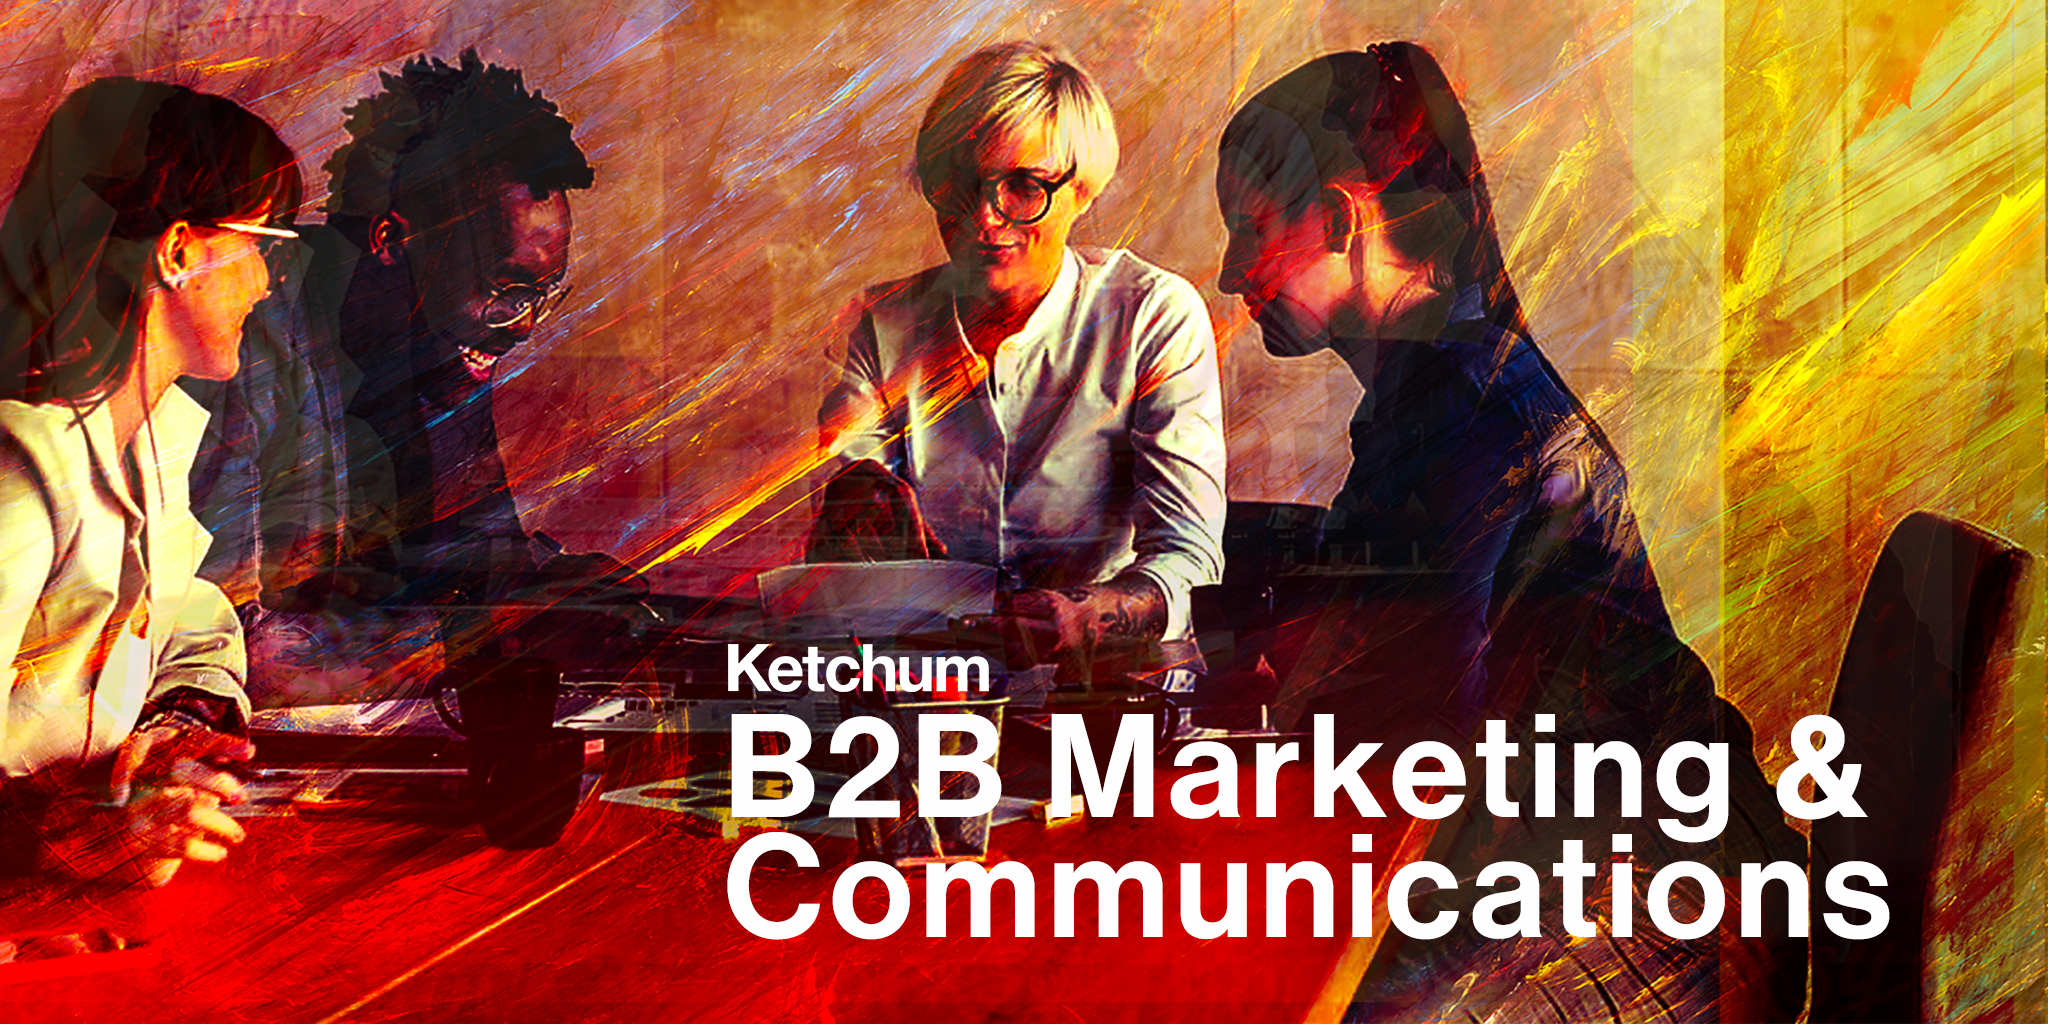 Ketchum B2B Marketing & Communications